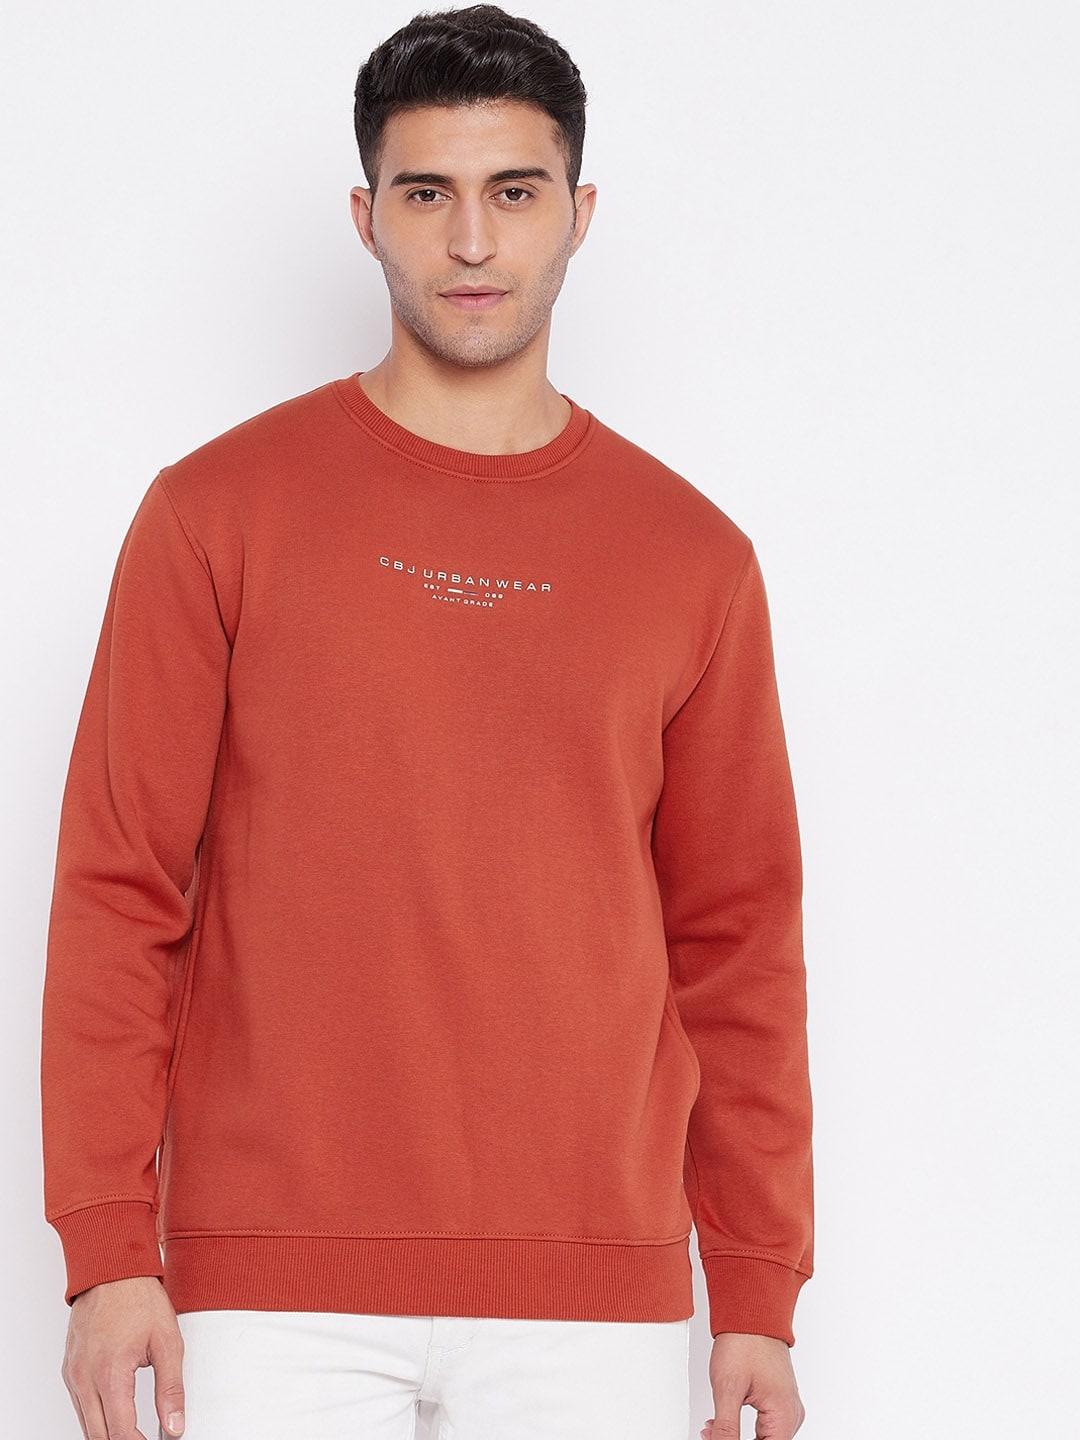 cantabil-men-rust-printed-sweatshirt